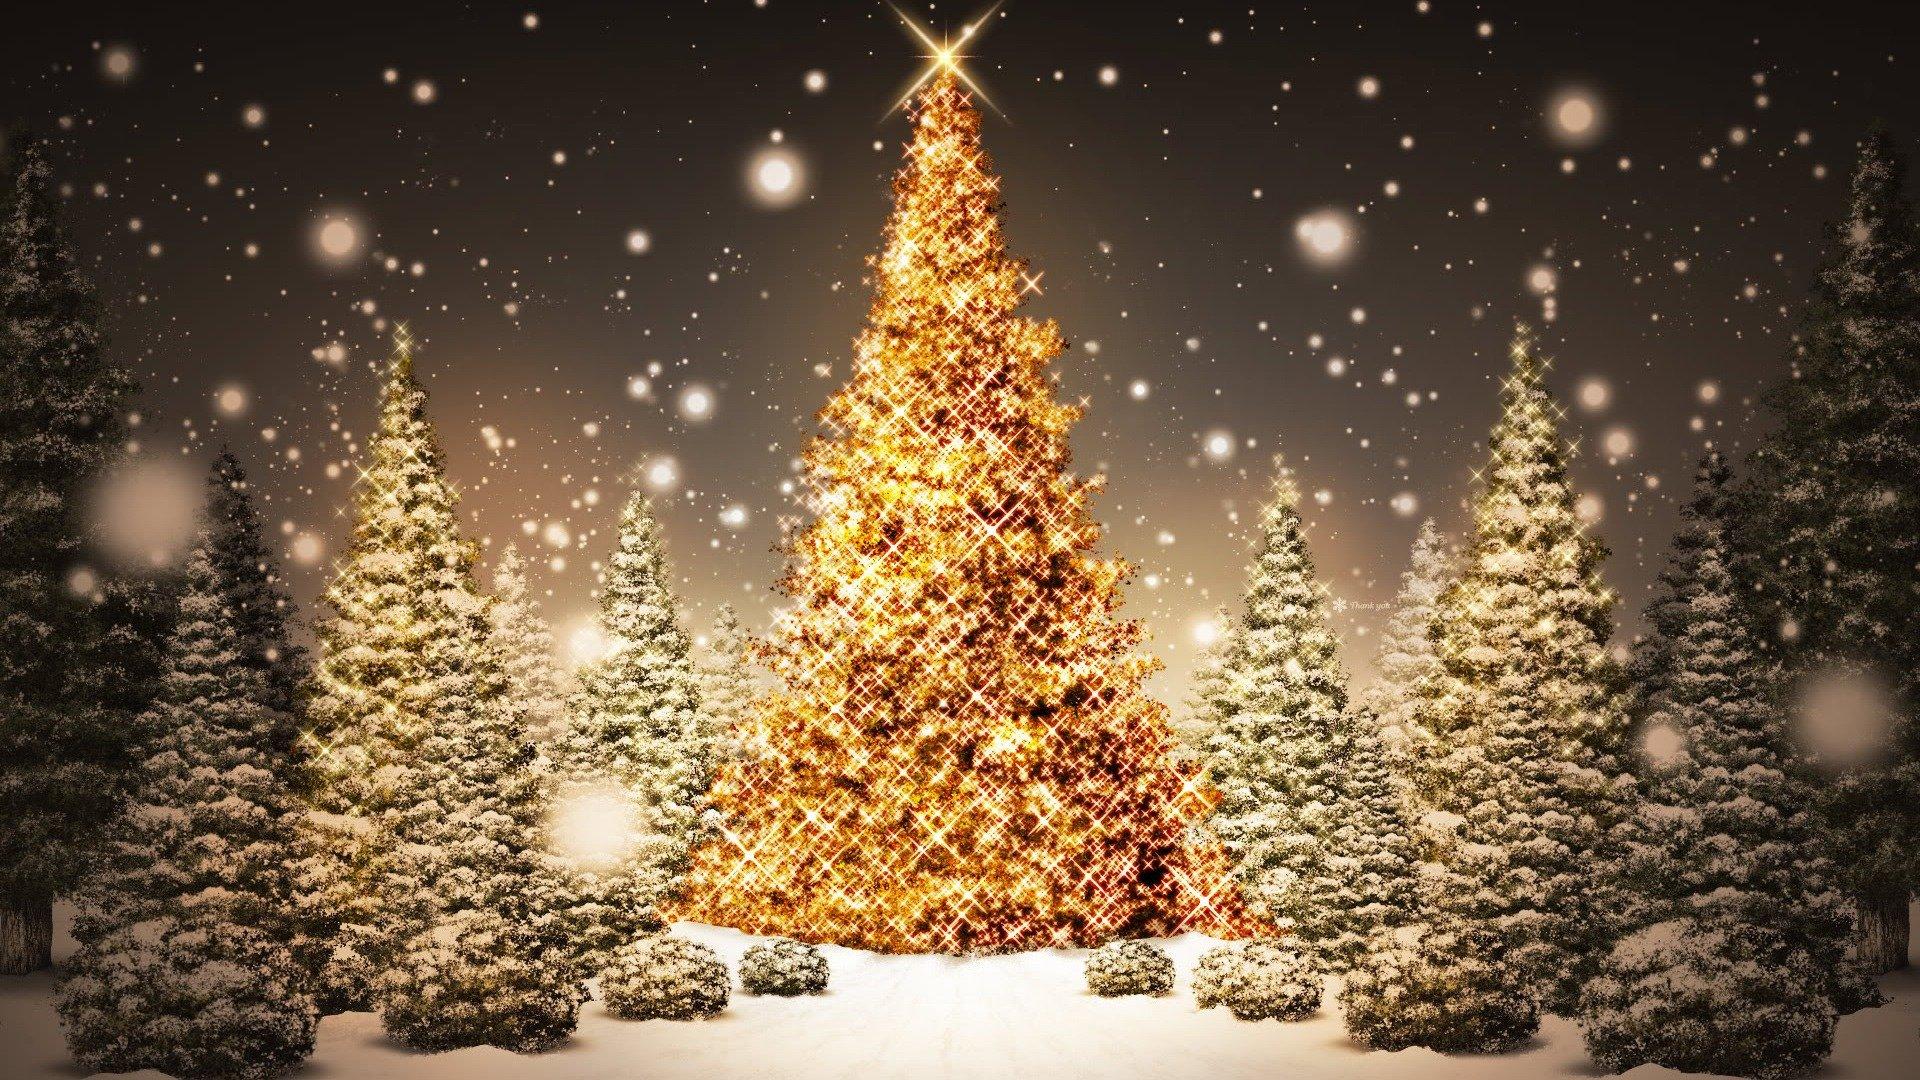 Free download Christmas Tree wallpaper 1920x1080 Full HD